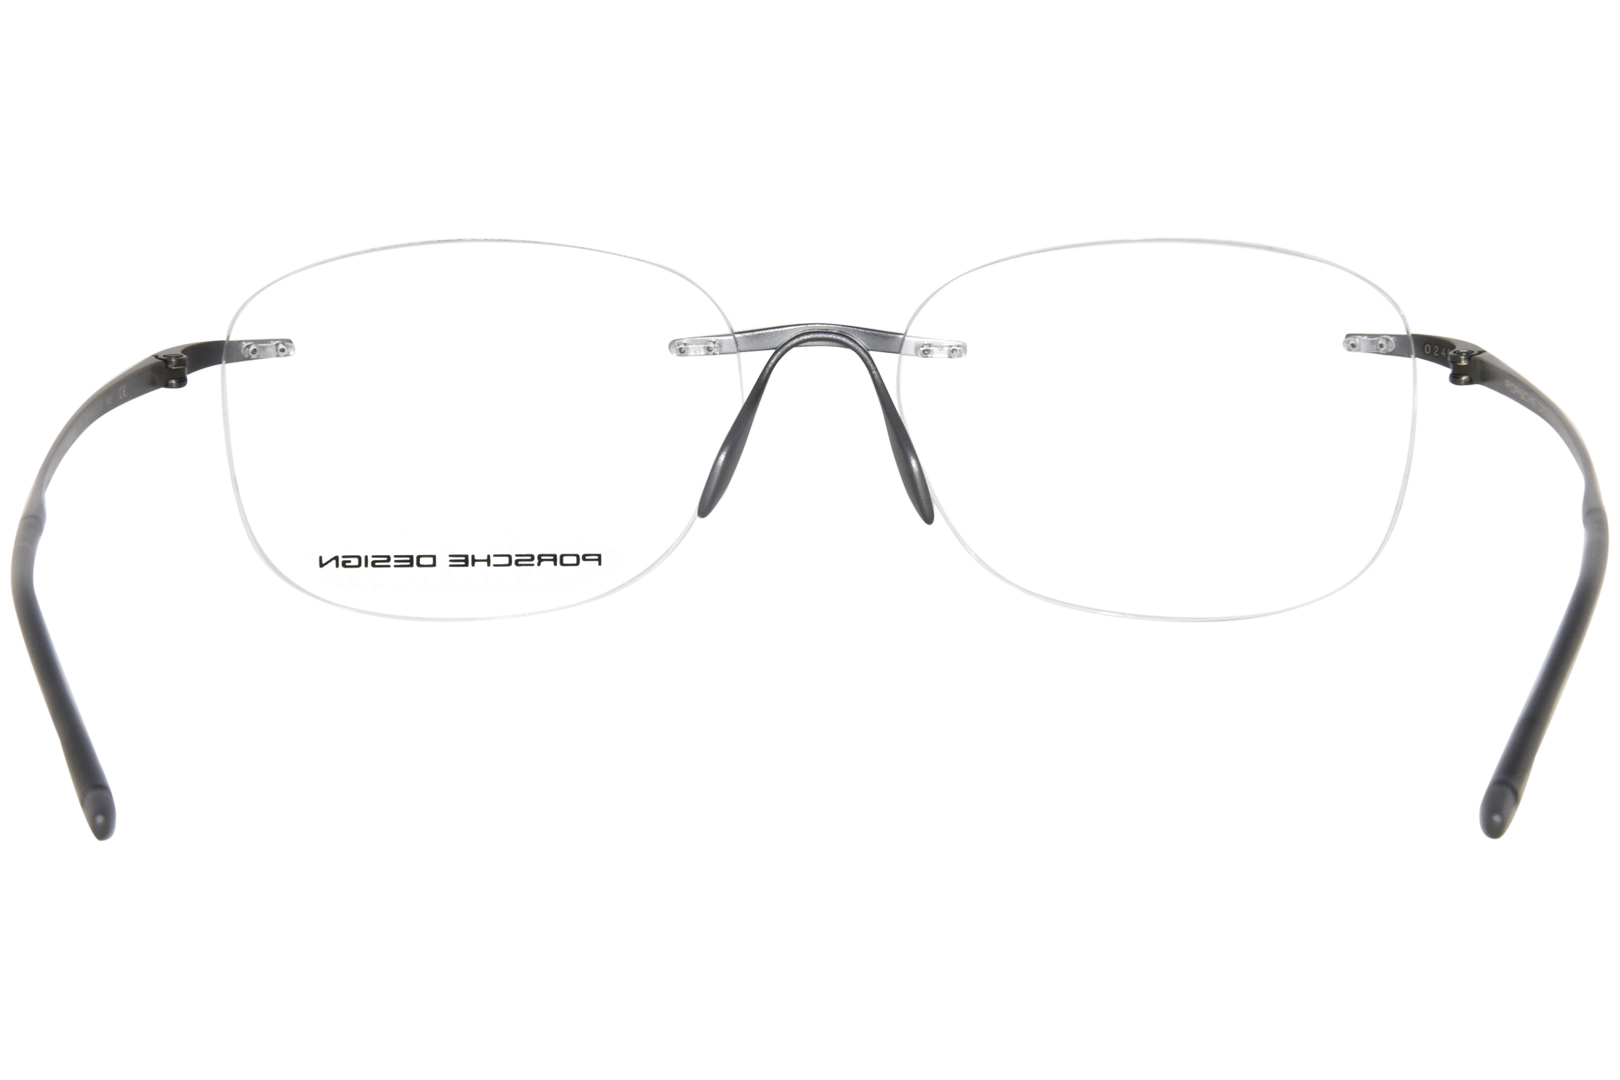 Porsche Design P8362-A Titanium Eyeglasses Men's Black Rimless 55-17 ...